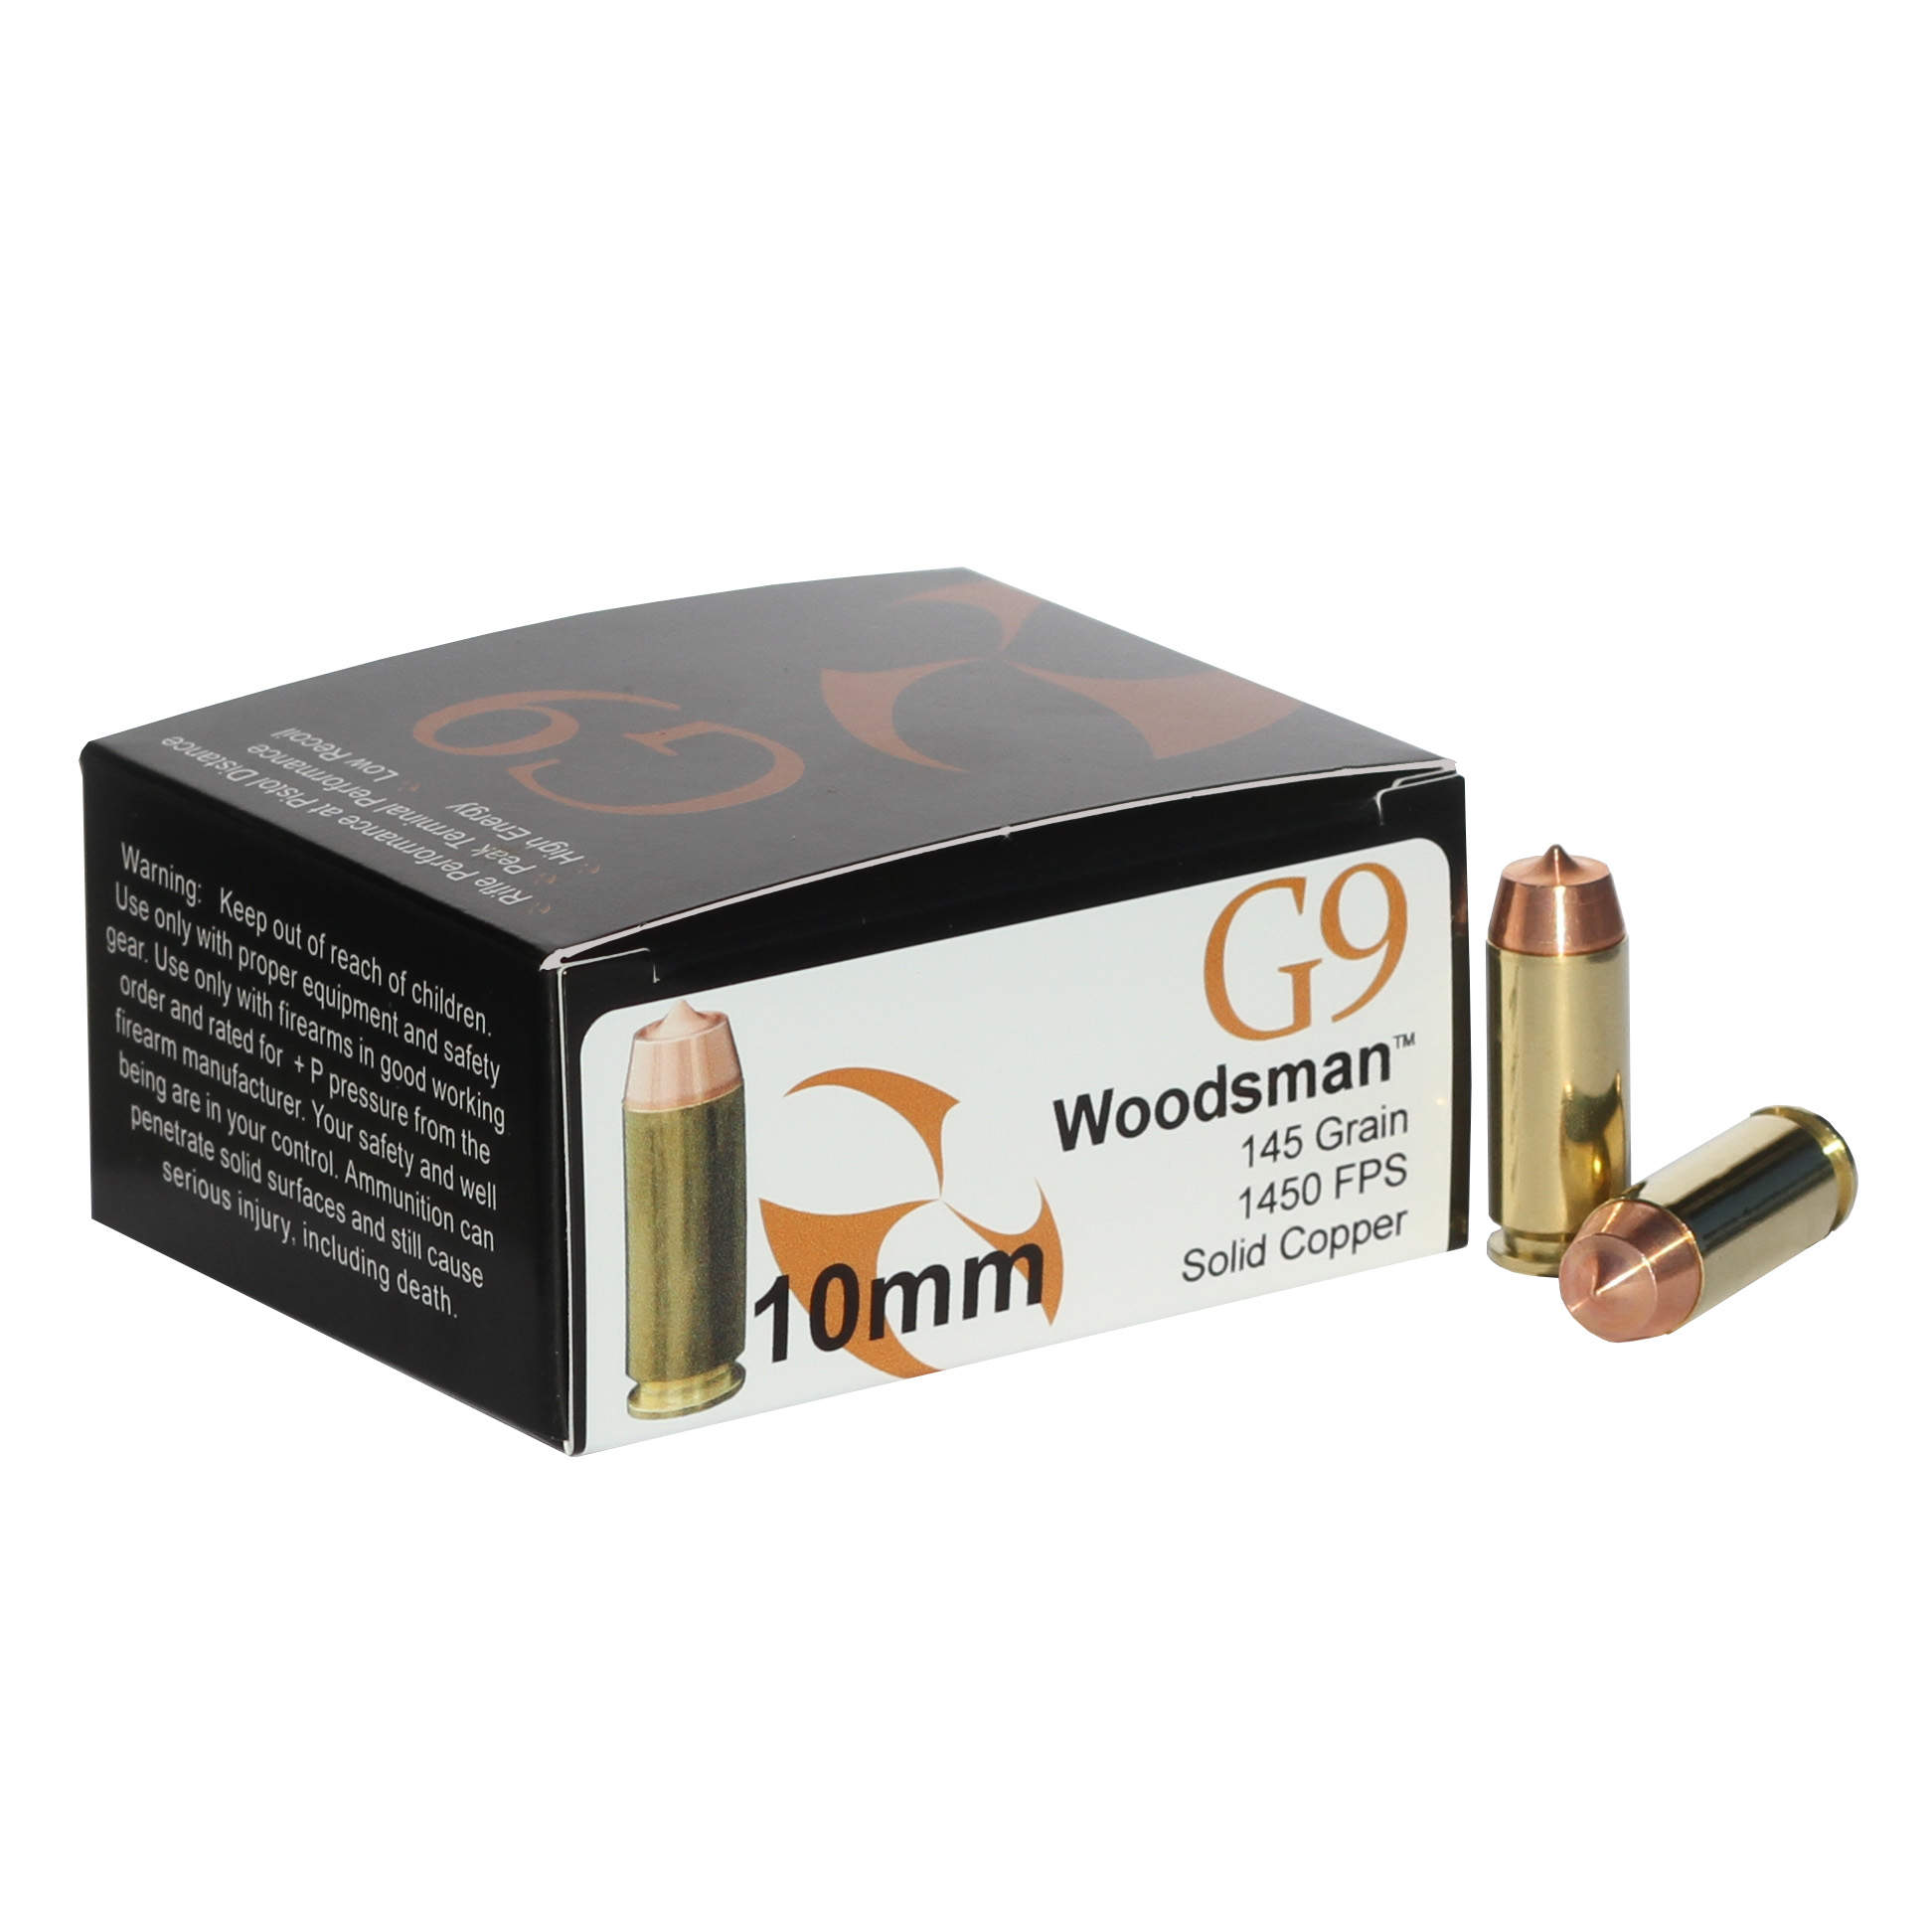 G9 ammunition